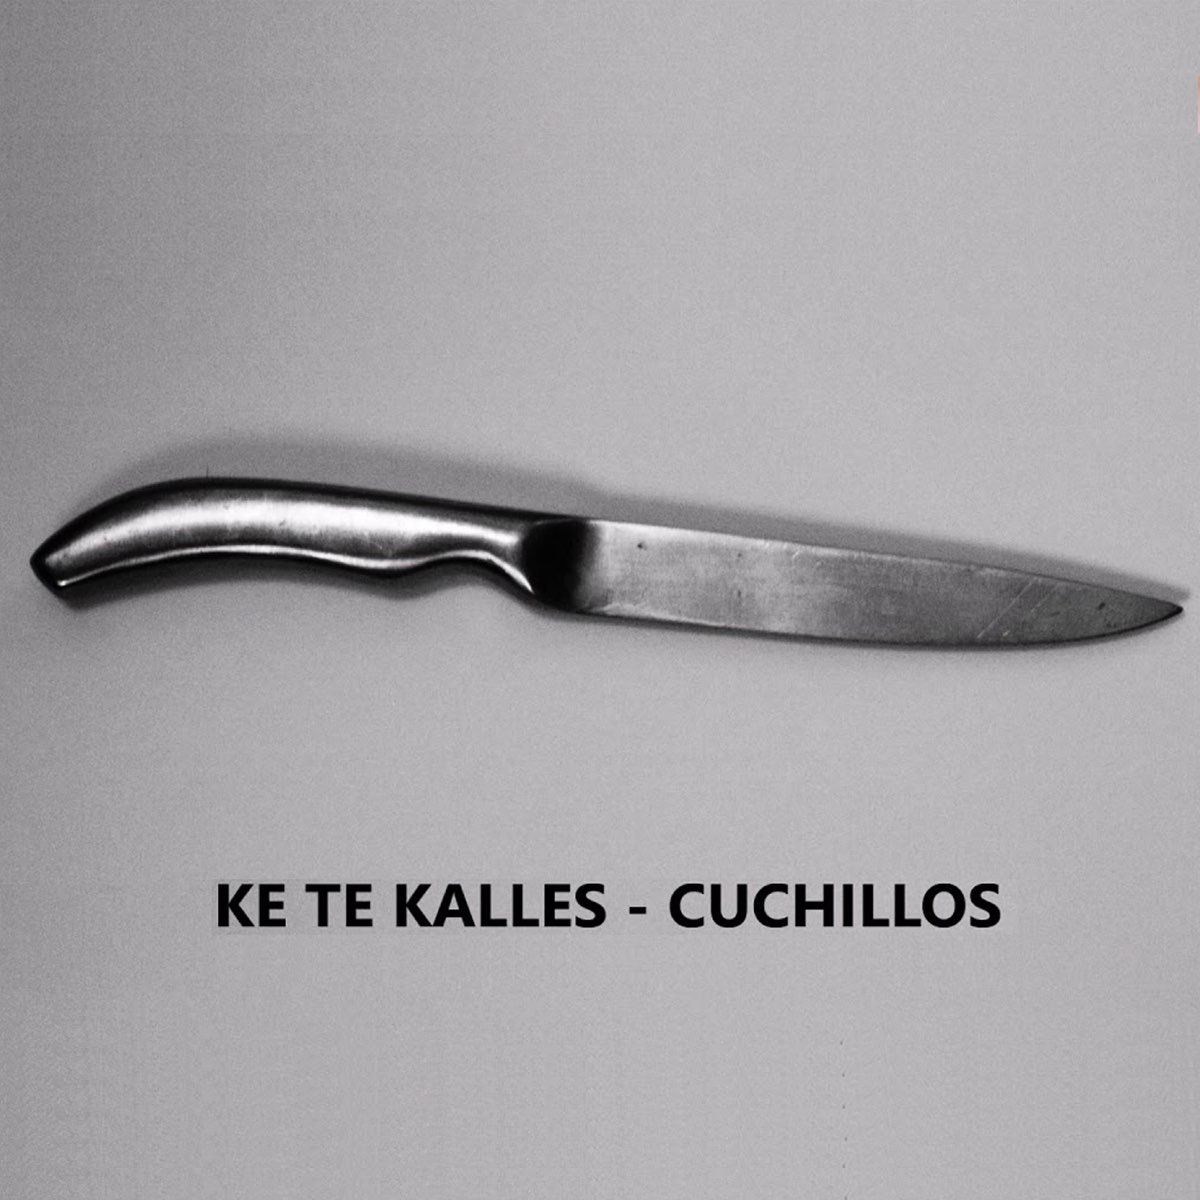 Cuchillos - Single by KeTeKalles on Apple Music